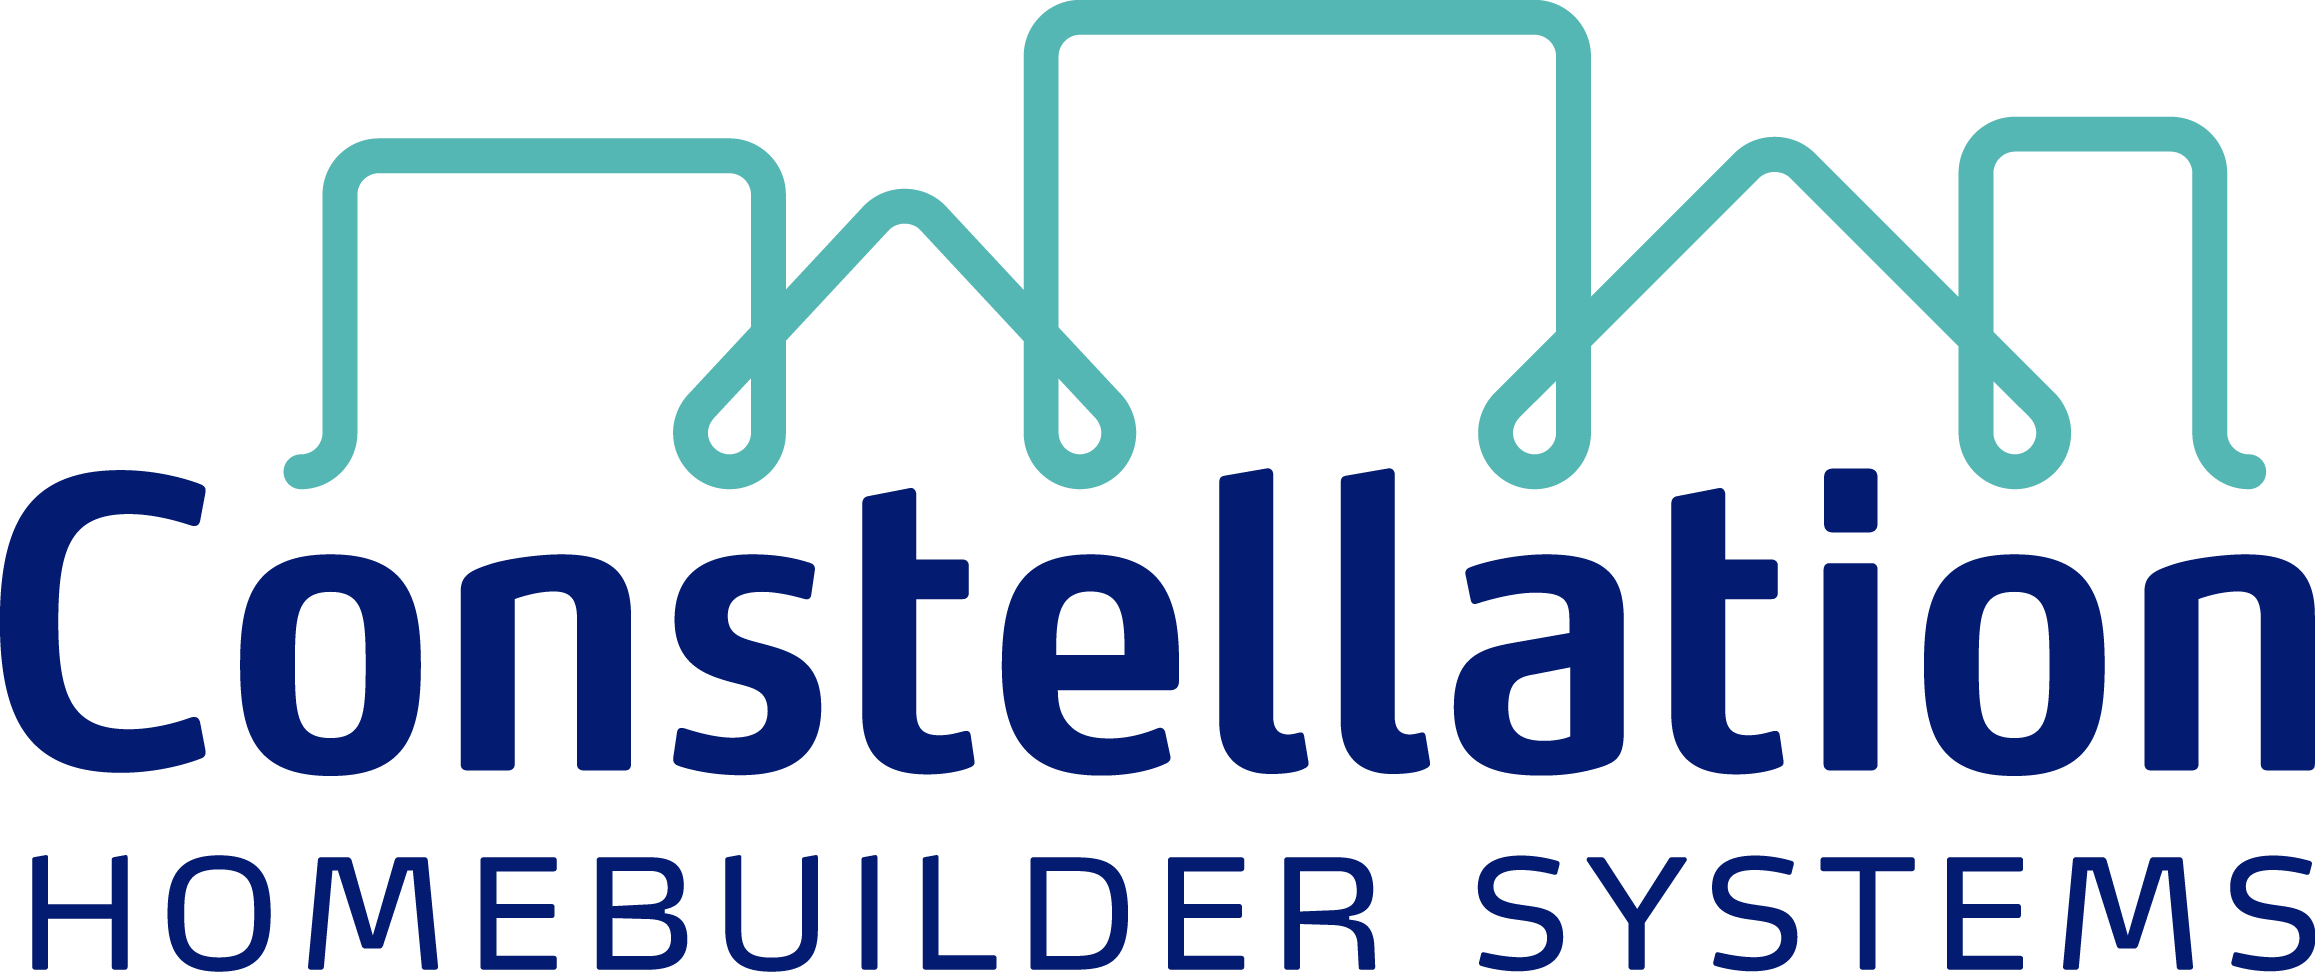 Constellation Homebuilder Systems Logo png